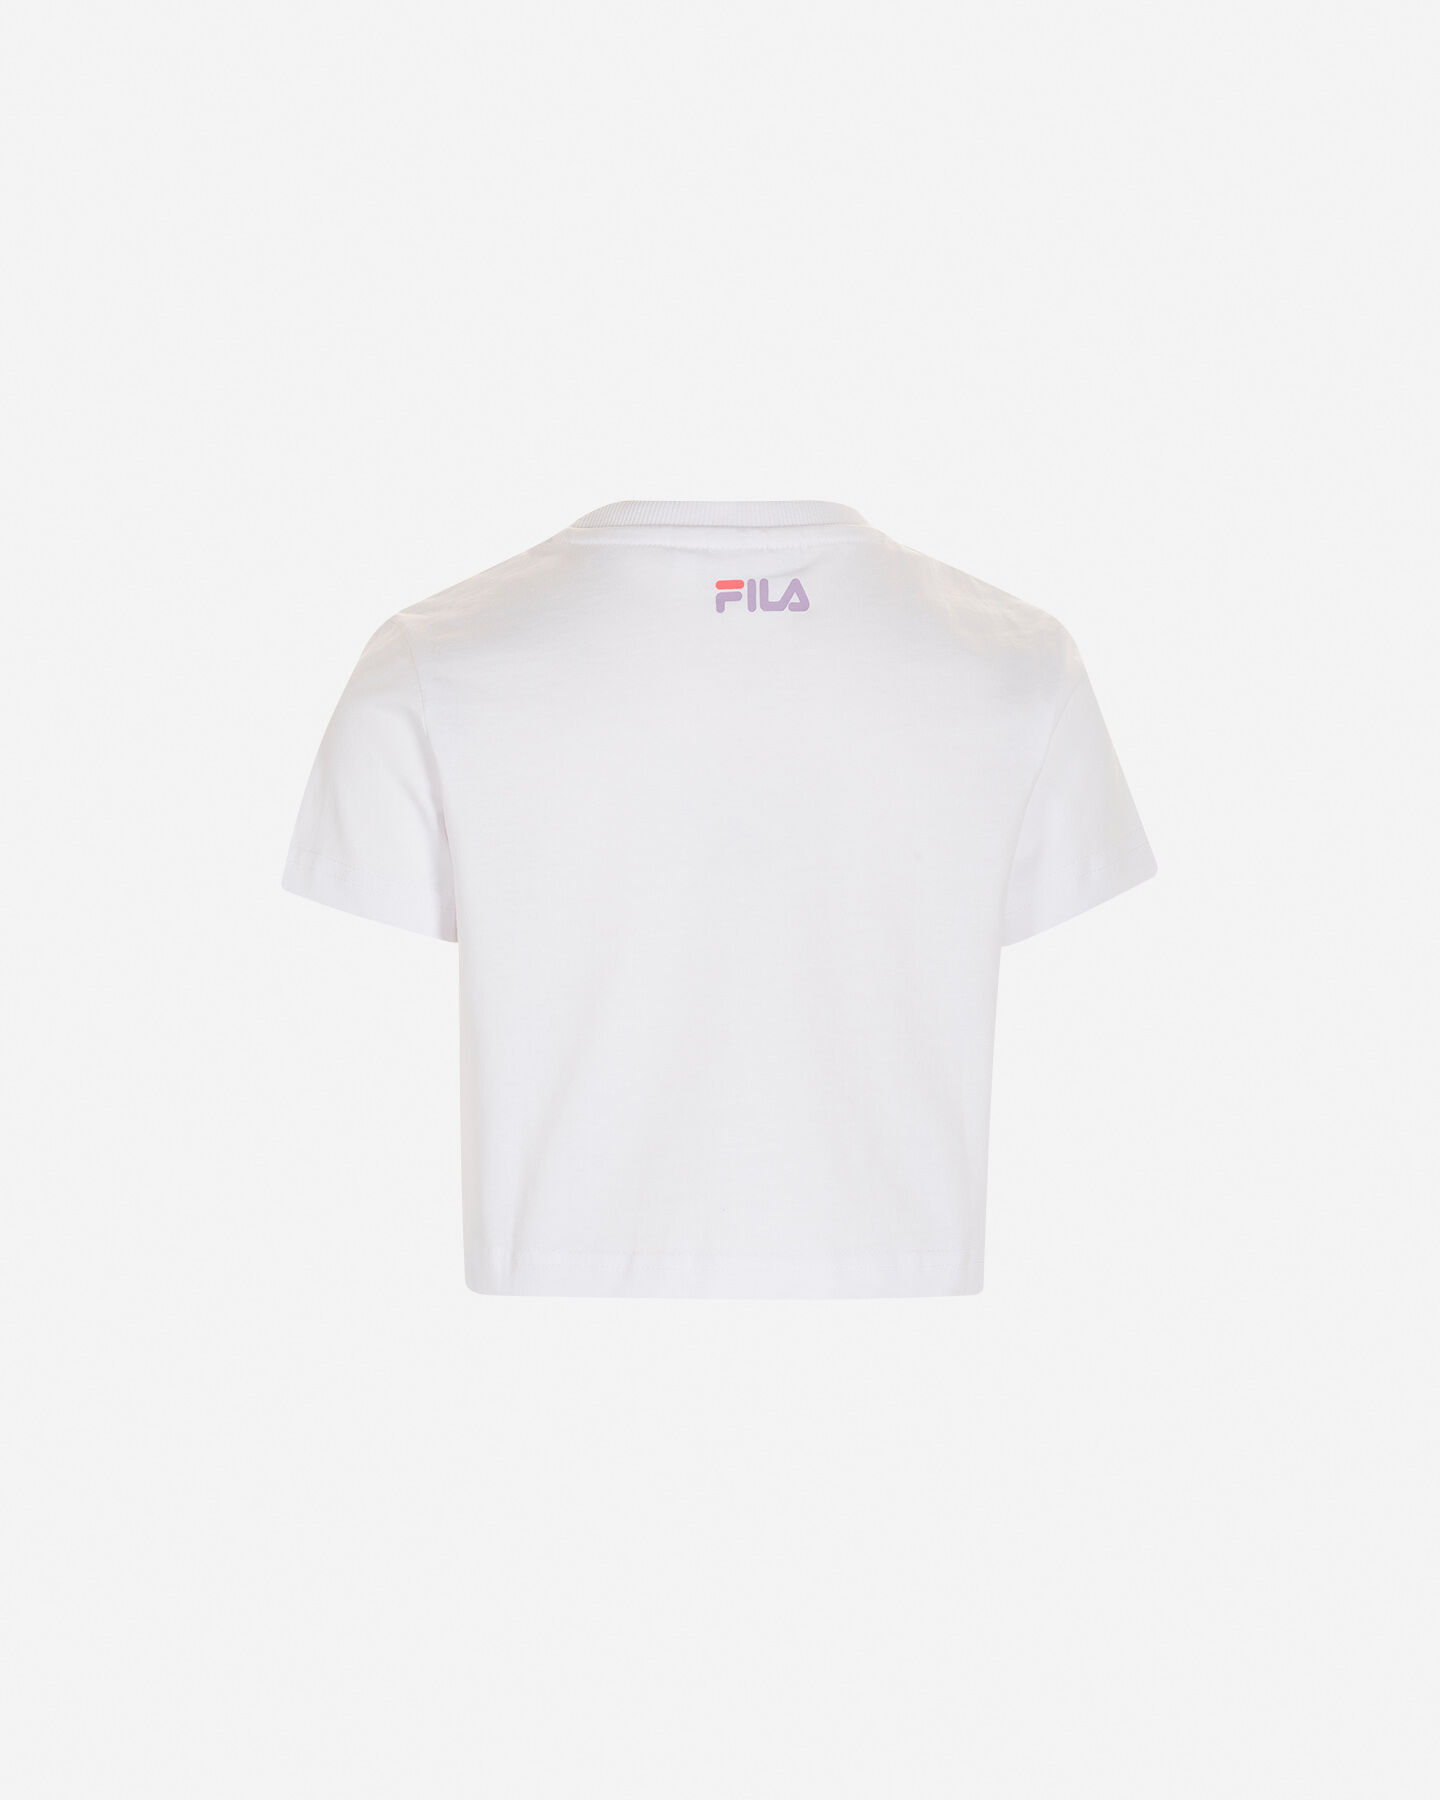  T-Shirt FILA GRAPHICS LOGO LINEA JR S4100803|001|6A scatto 1